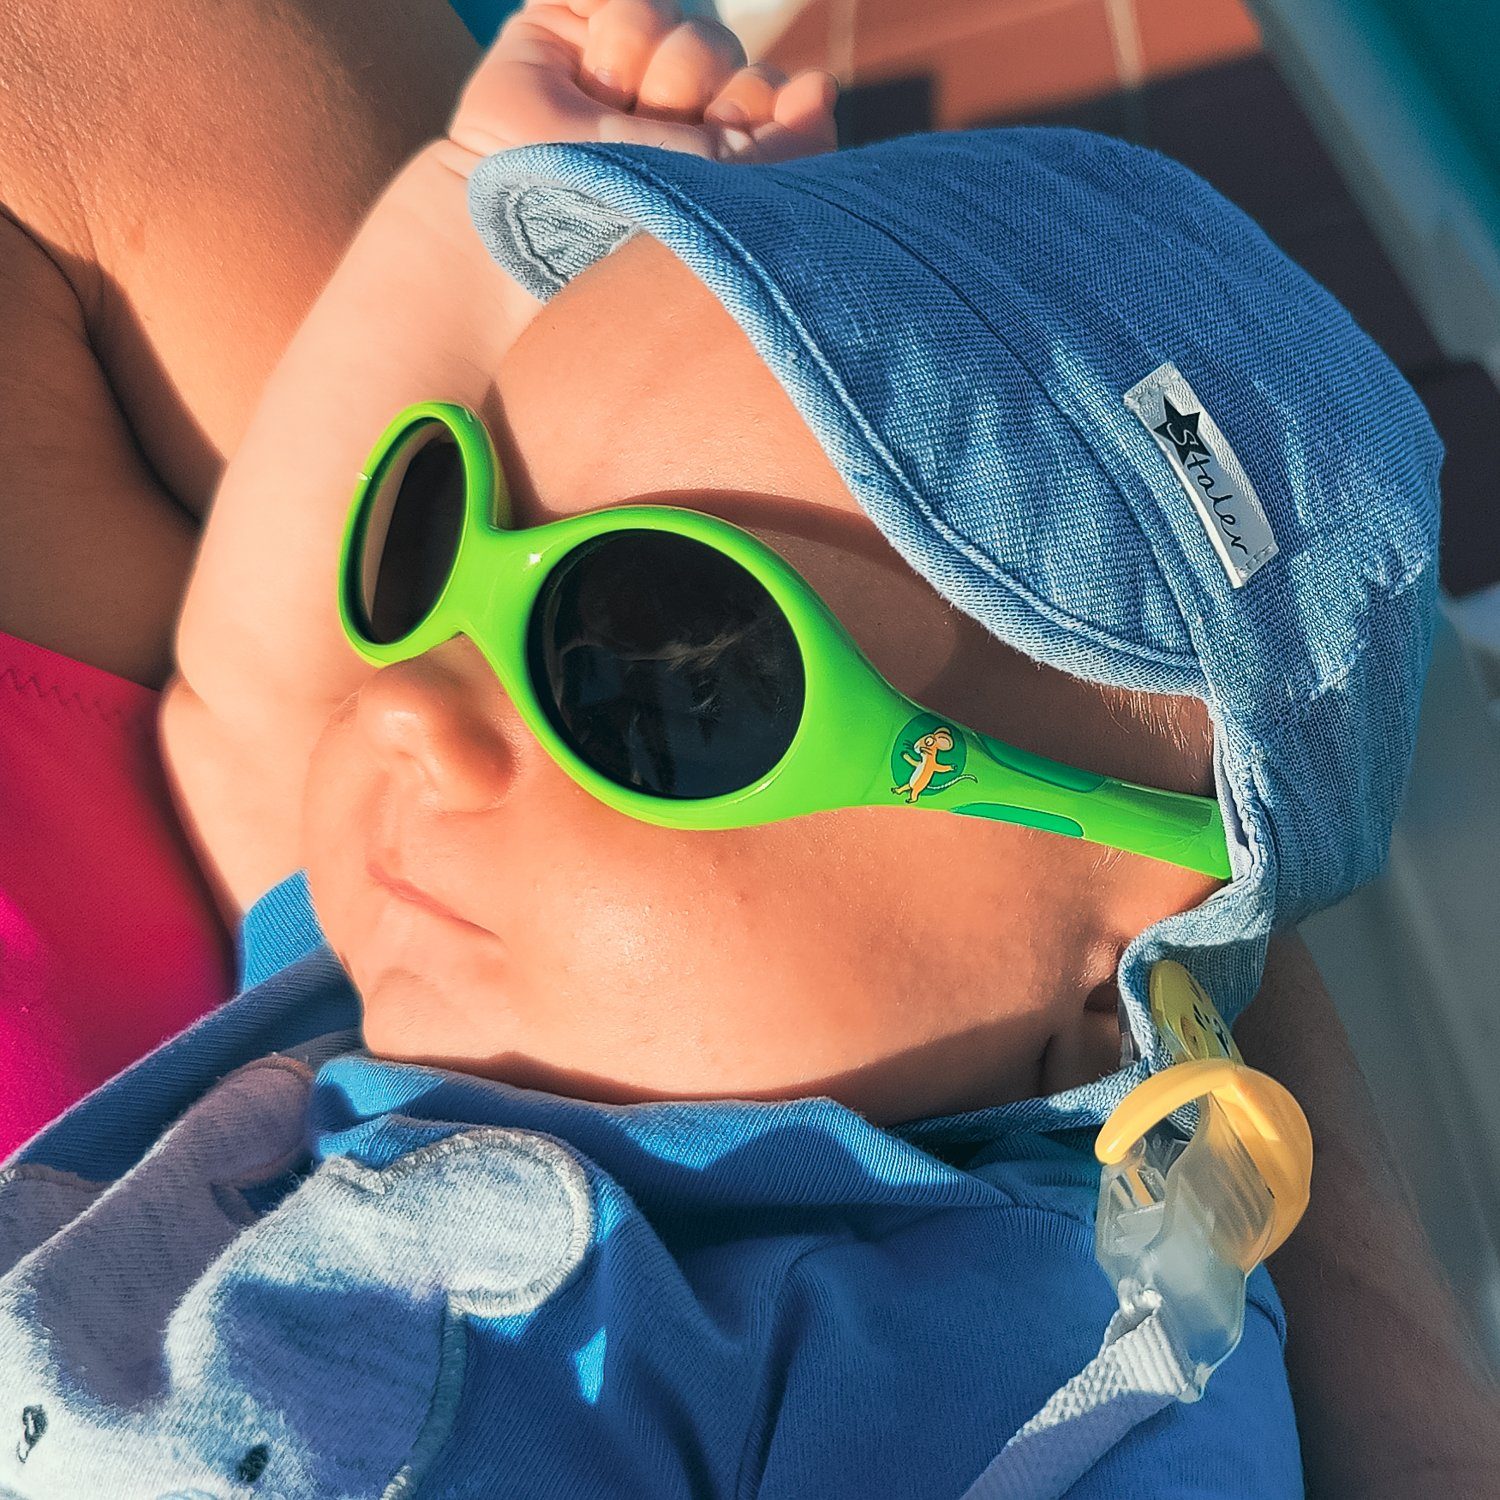 ActiveSol SUNGLASSES Sonnenbrille Grüffelo für Sonnenbrille Der Grün Babys Premium Grüffelo